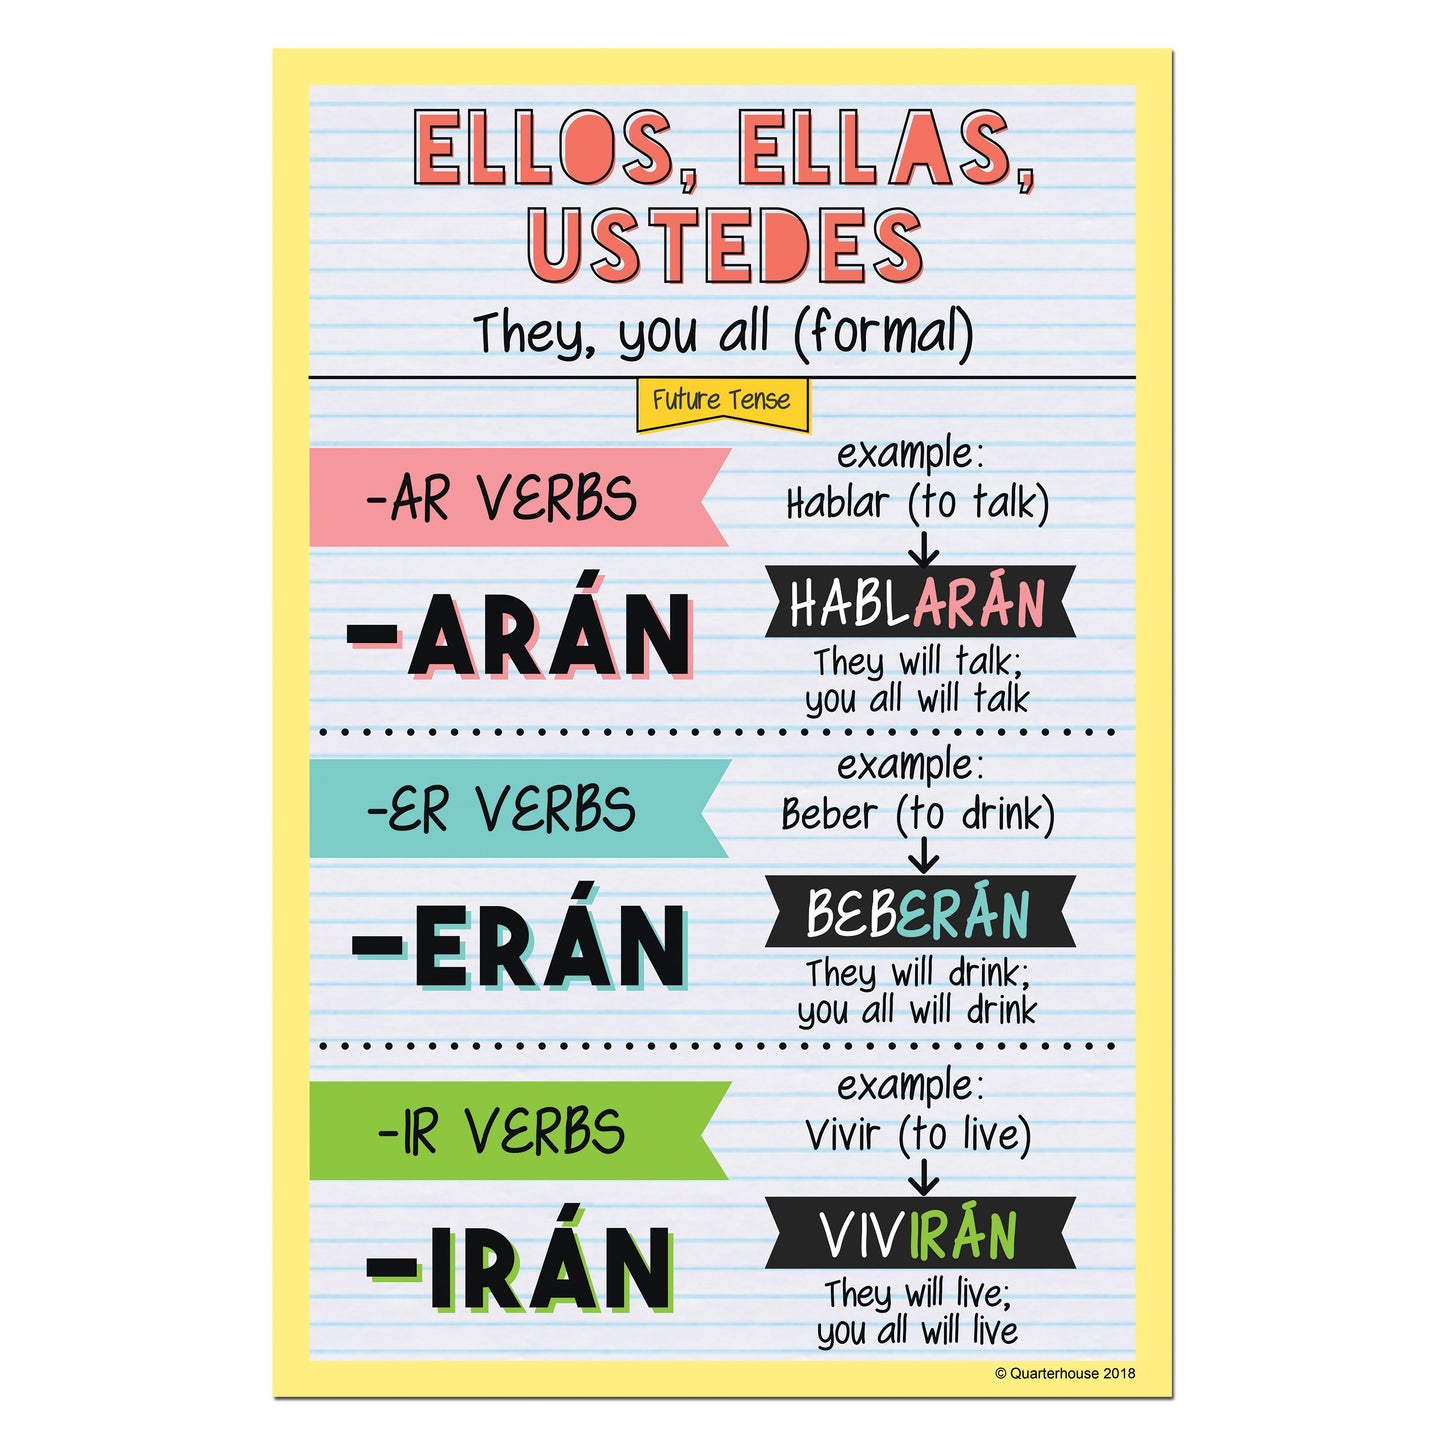 Quarterhouse Ellos, Ellas, Ustedes - Future Tense Spanish Verb Conjugation Poster, Spanish and ESL Classroom Materials for Teachers